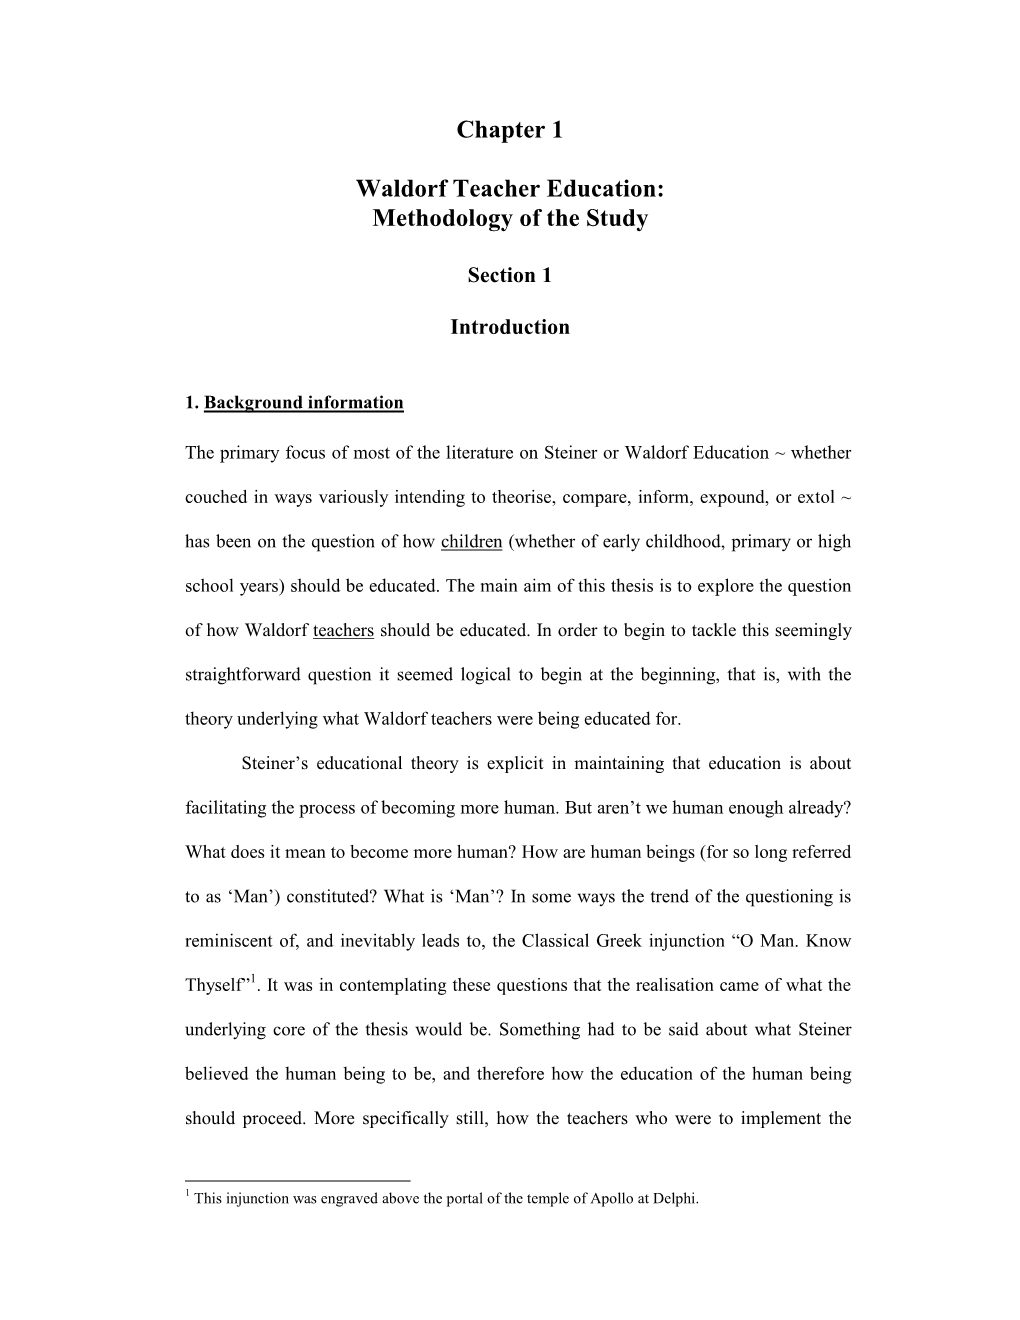 Chapter 1 Waldorf Teacher Education